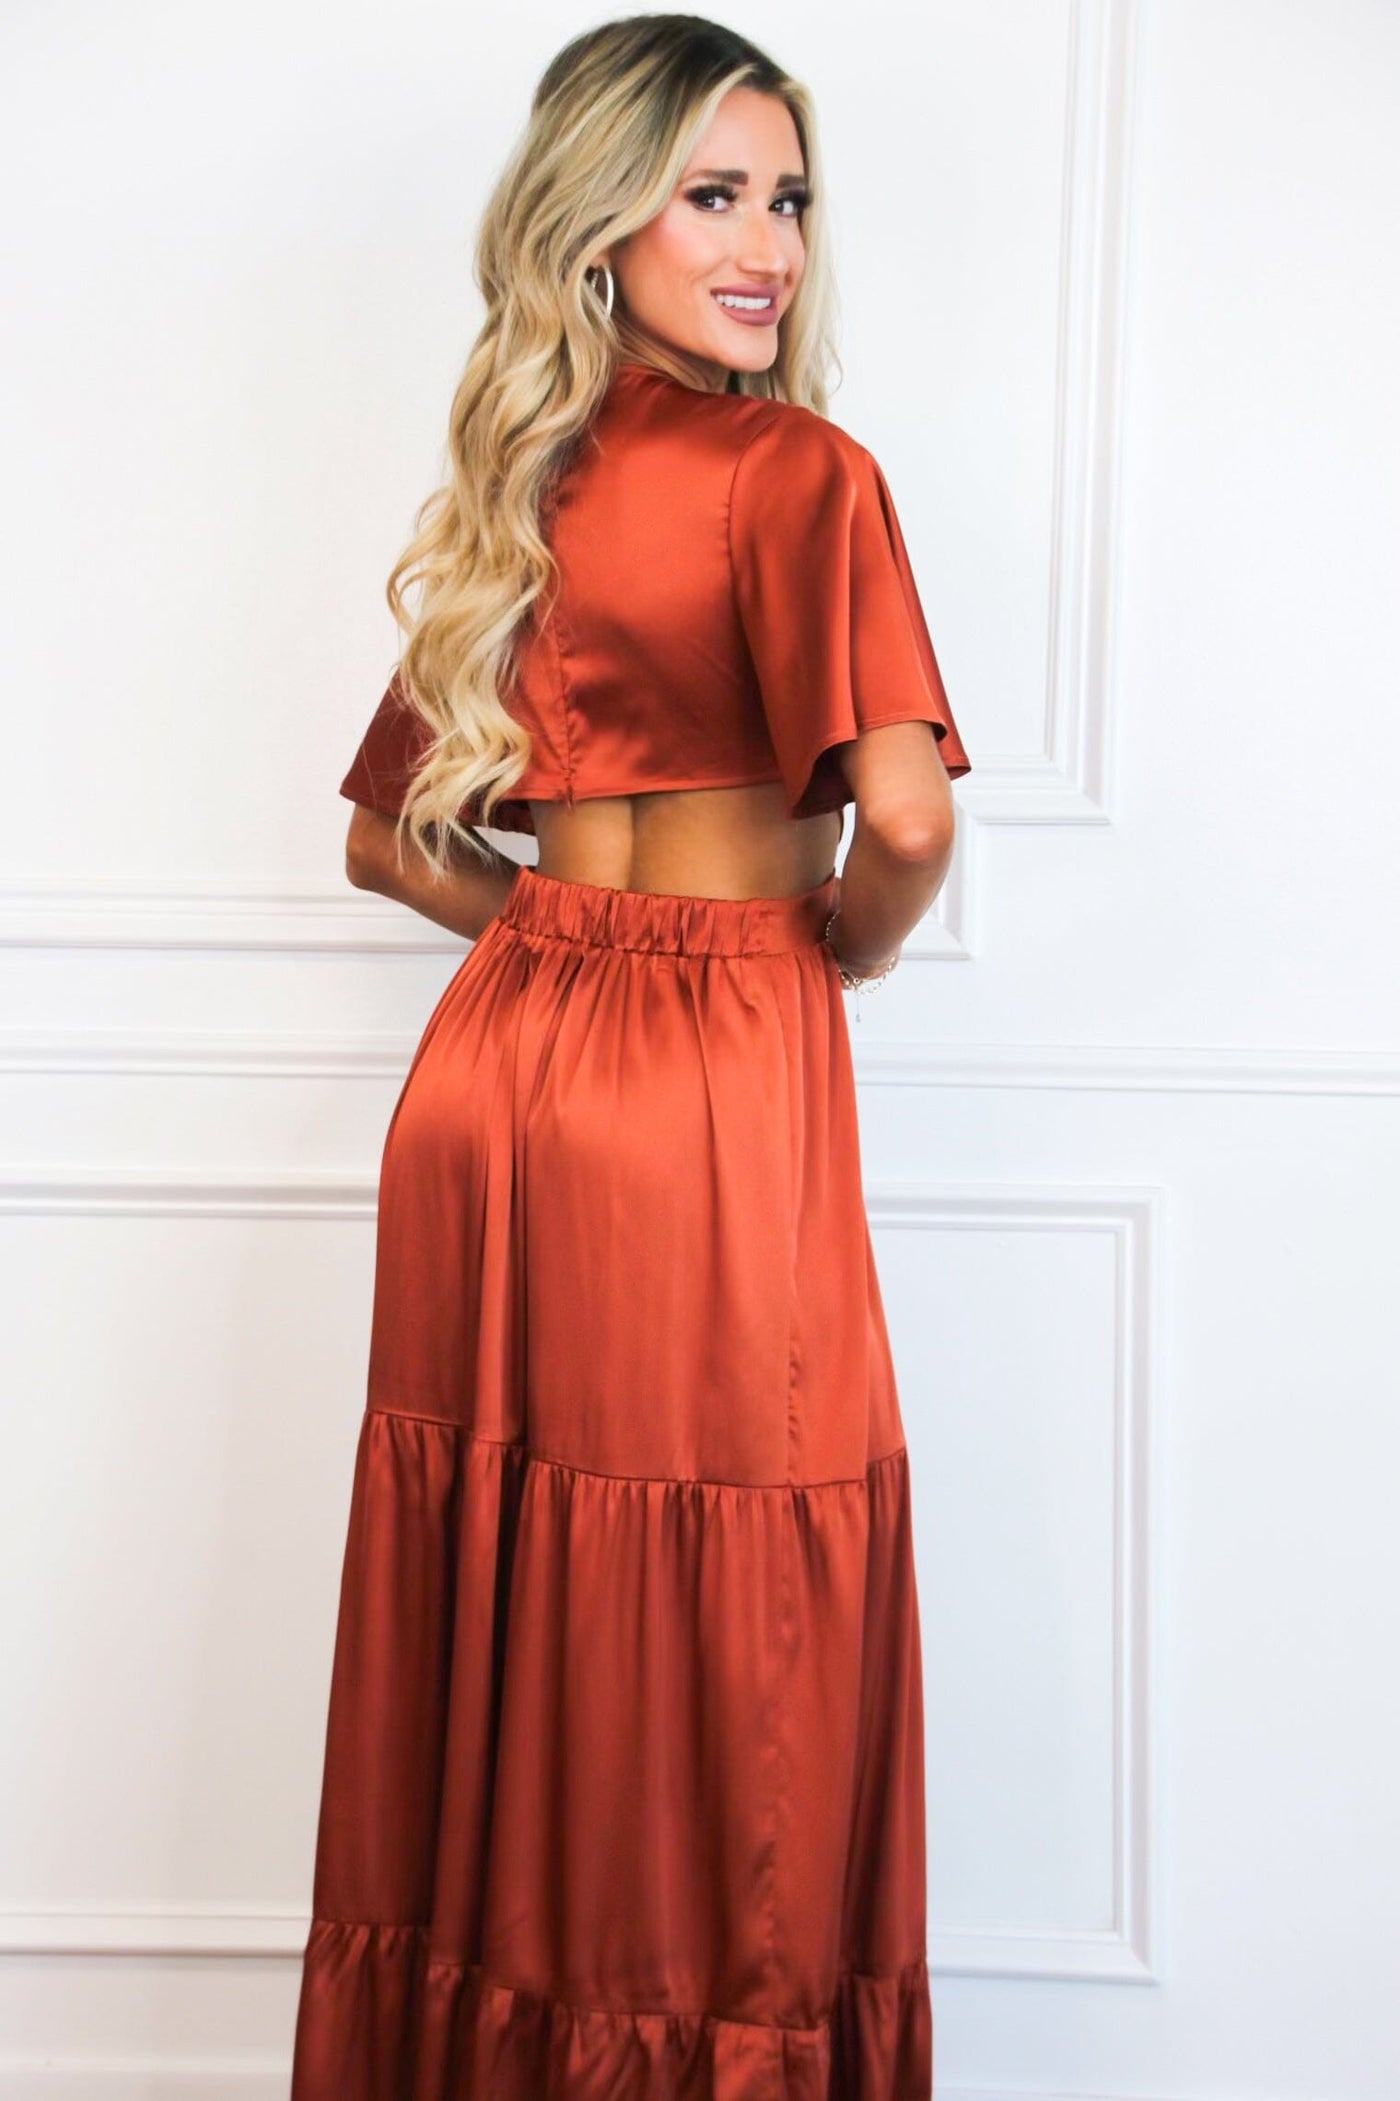 Braxton Cutout Satin Maxi Dress: Rust - Bella and Bloom Boutique